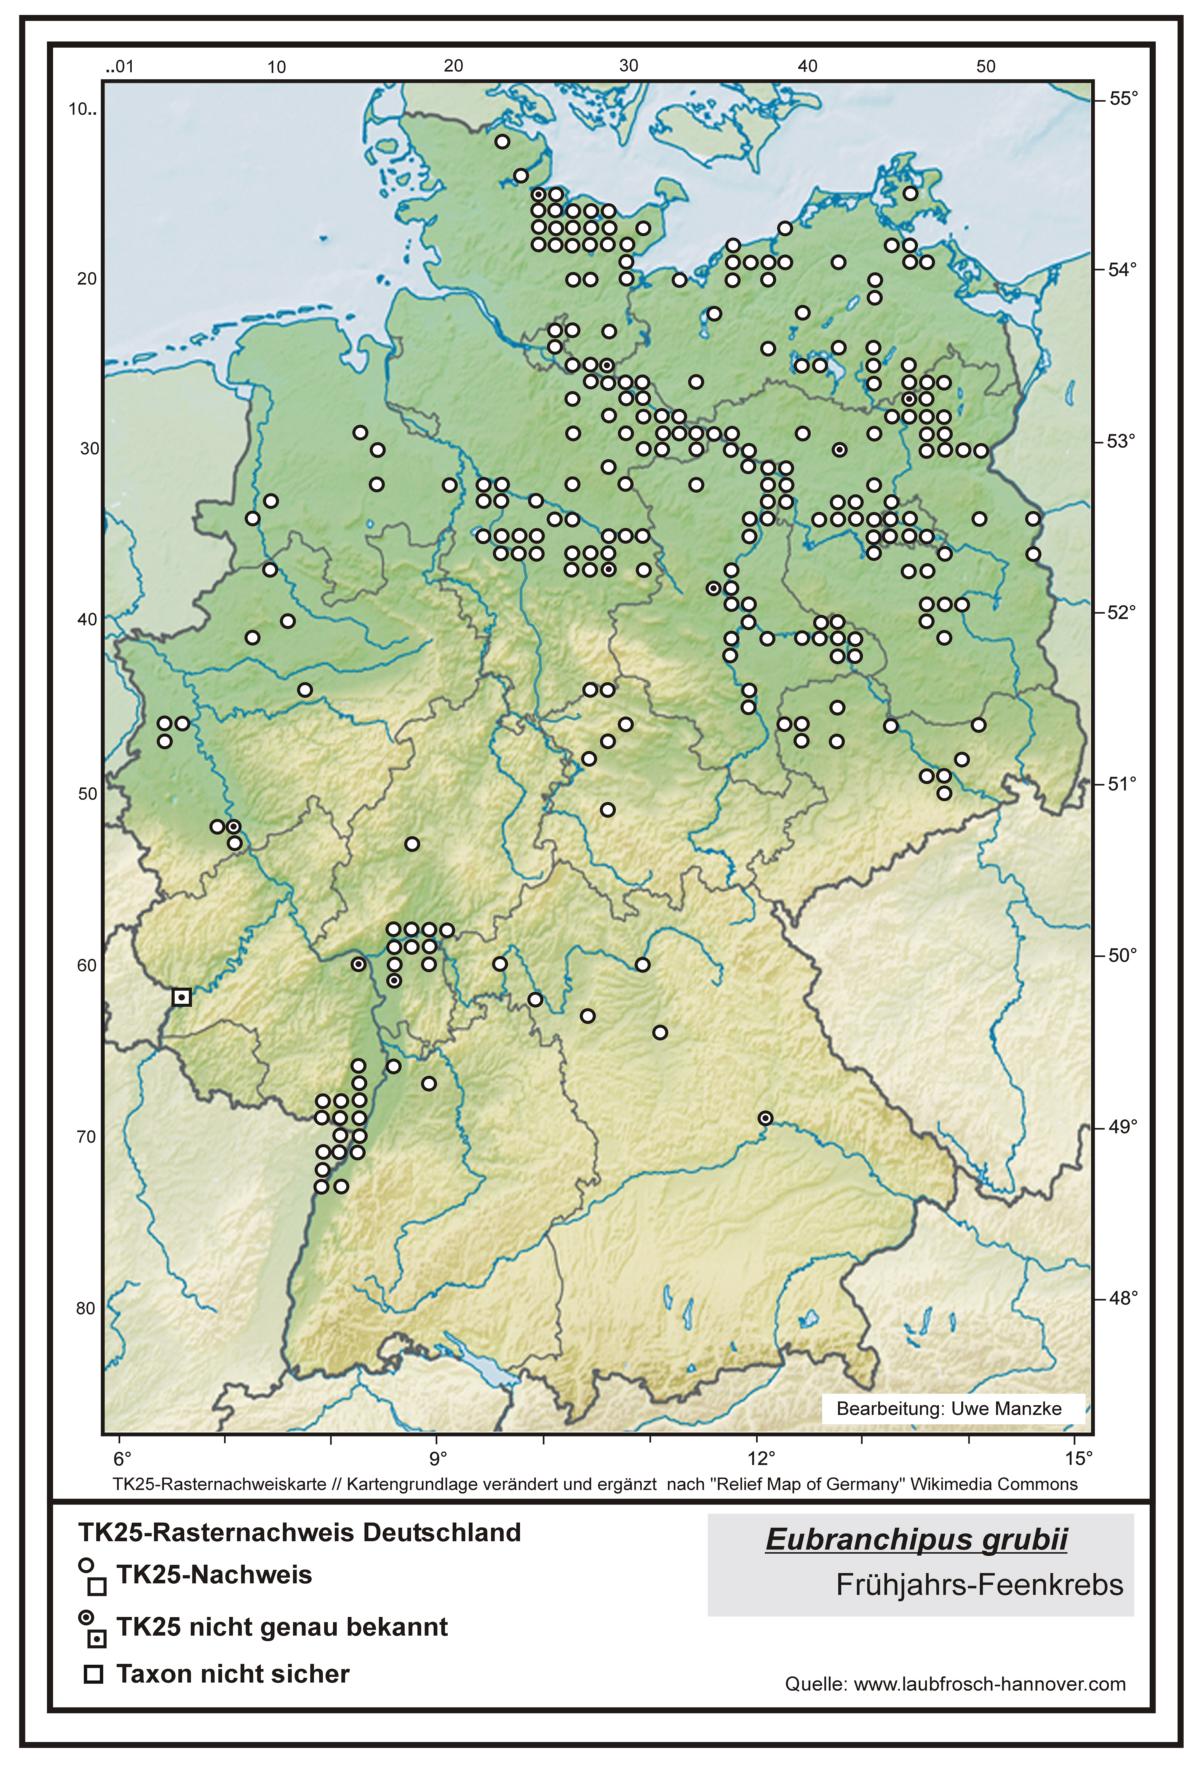 Eubranchipus grubii TK25-Rasternachweiskarte Deutschland, Bearbeitung Uwe Manzke; Kartengrundlage: verändert n. Relief Map of Germany Wikimedia Commons https://commons.wikimedia.org/wiki/File:Relief_Map_of_Germany.svg